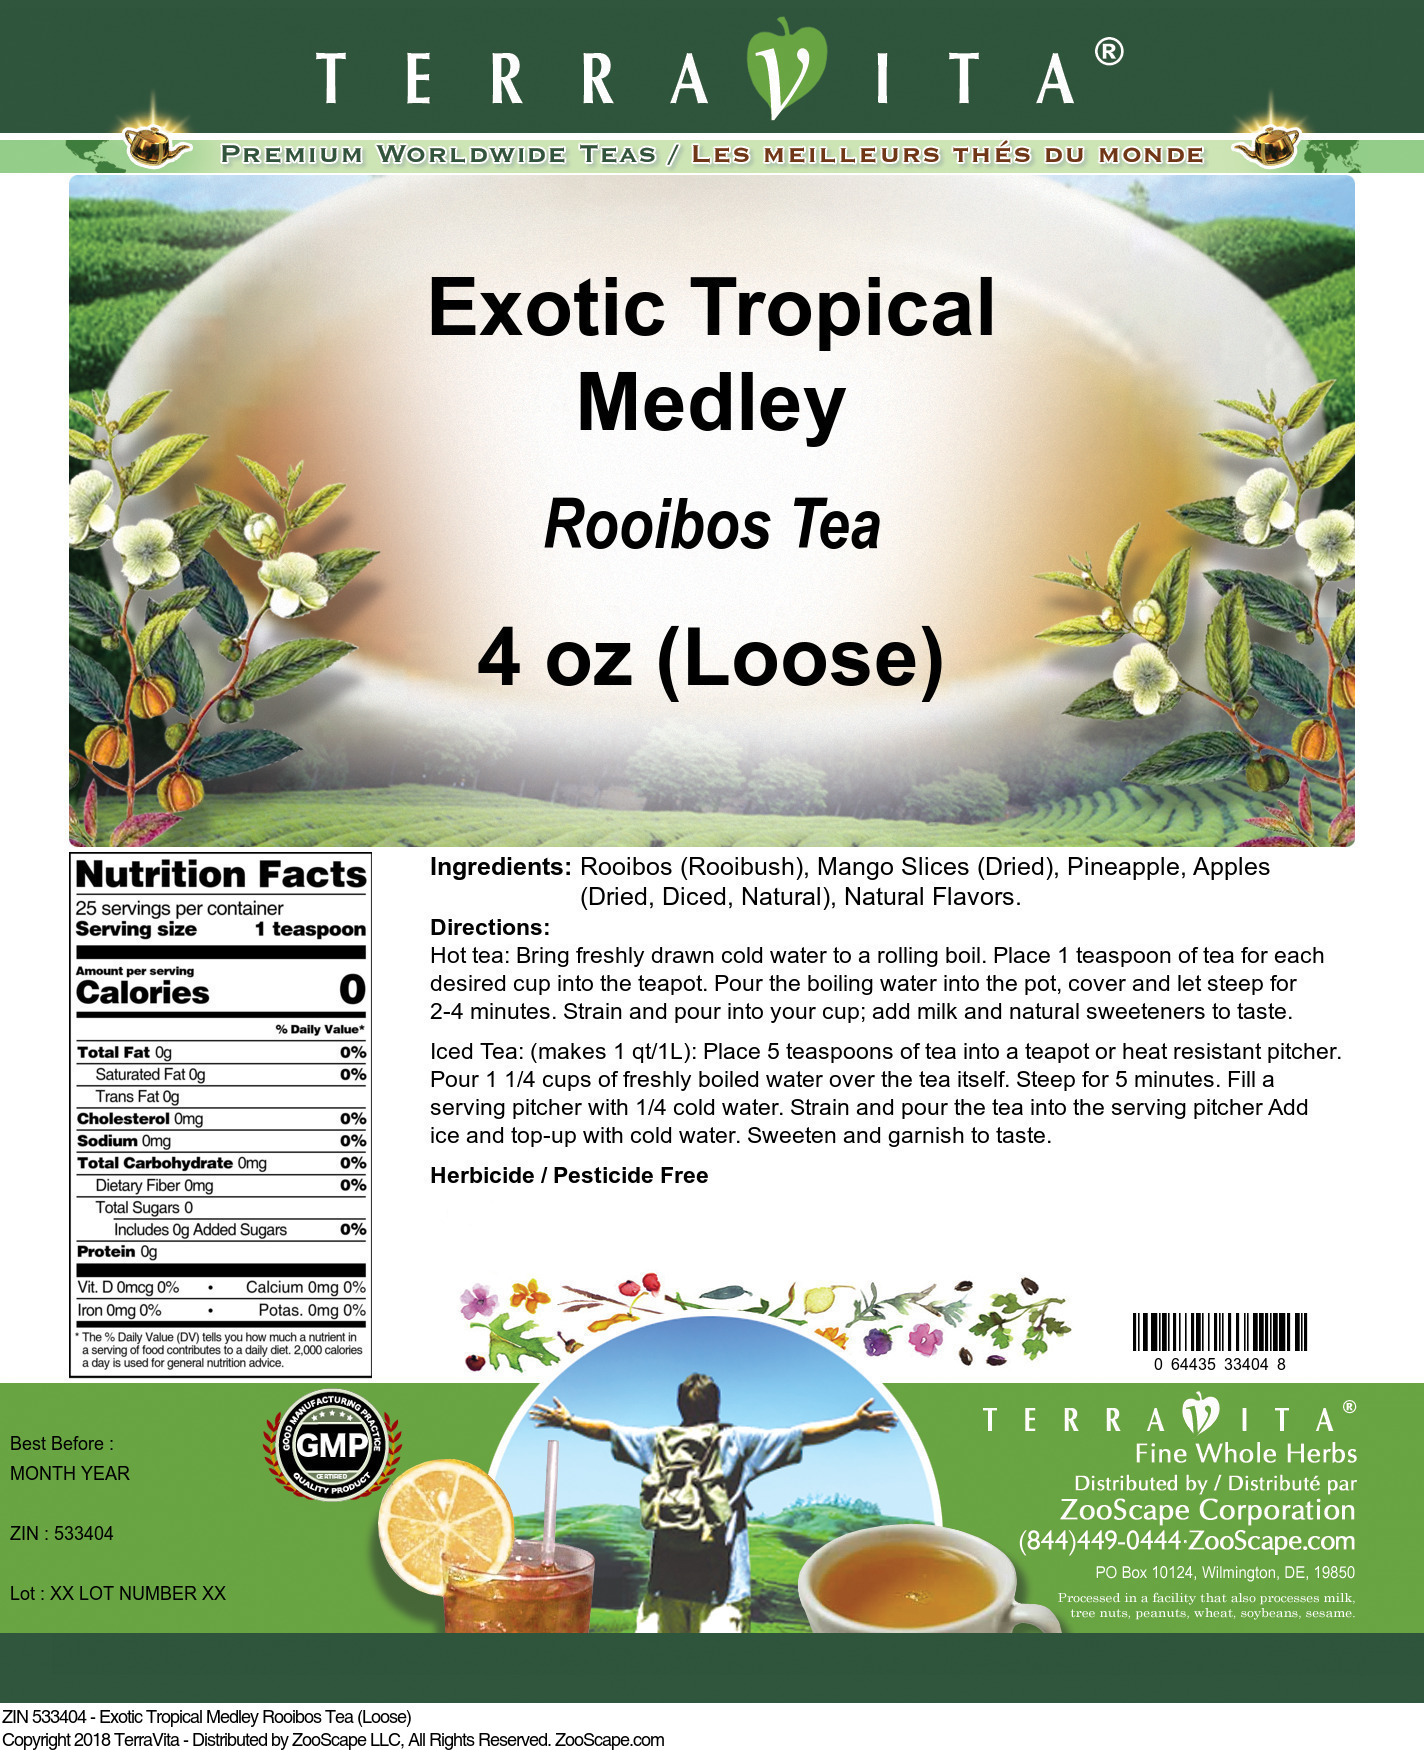 Exotic Tropical Medley Rooibos Tea (Loose) - Label